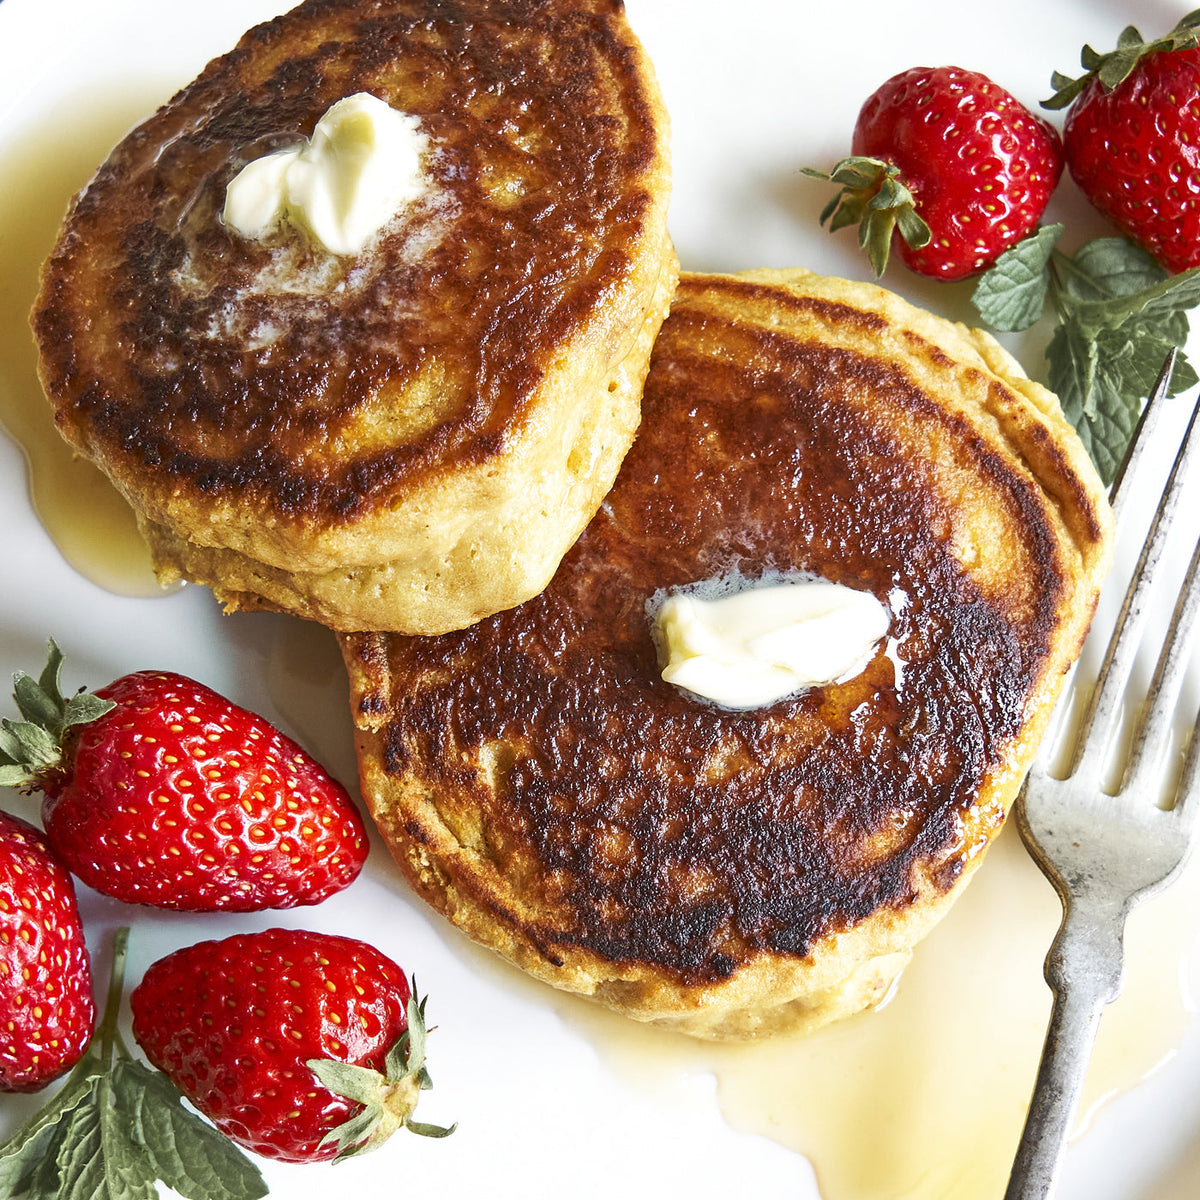 Oatman Farms Pancake and Waffle Mix White Sonora